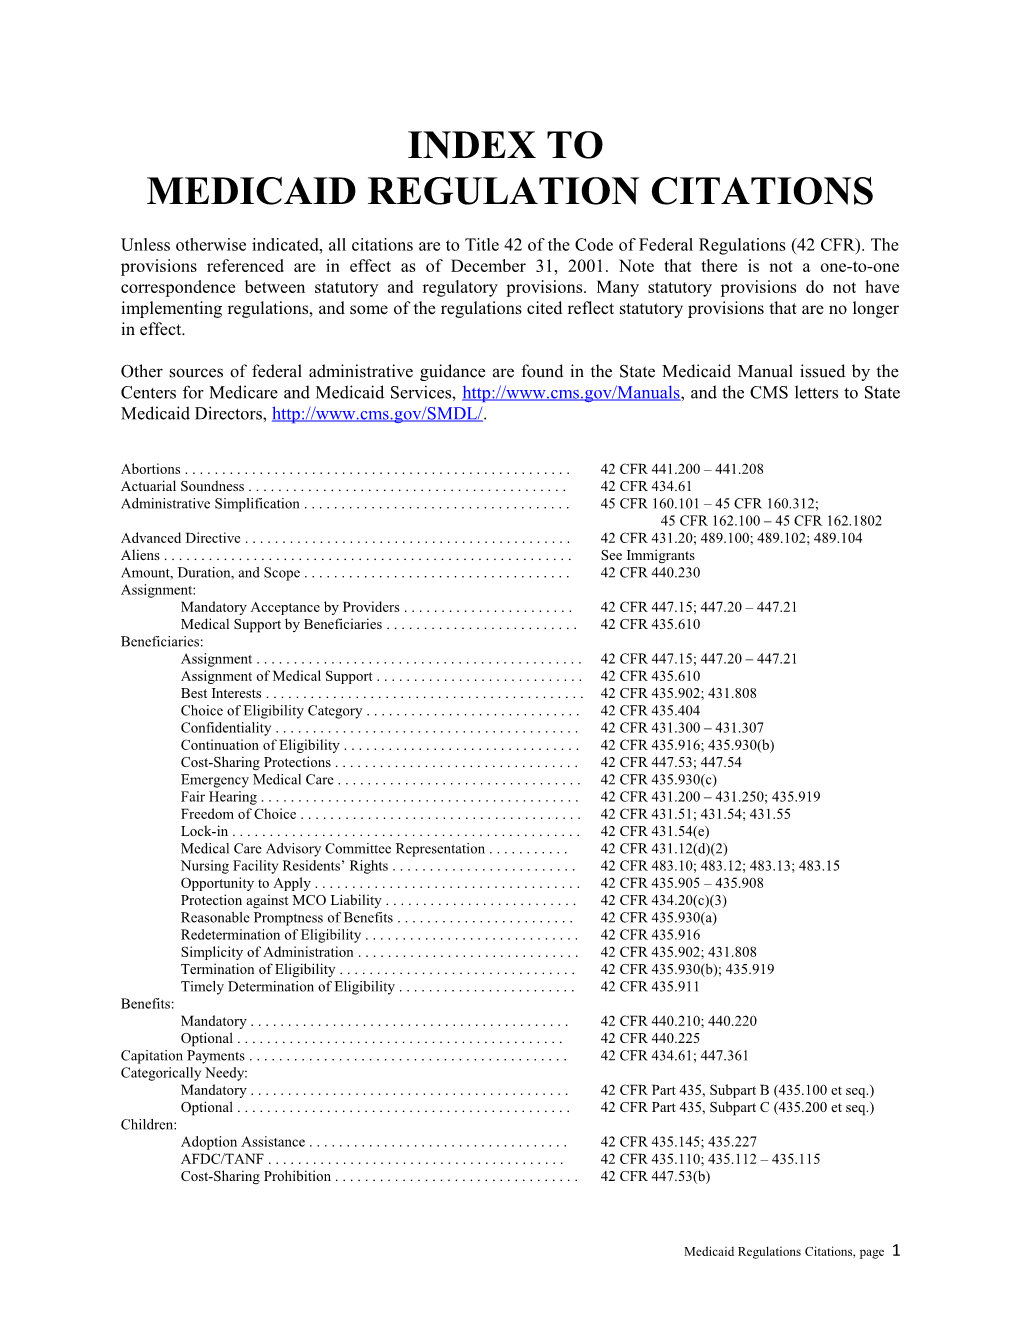 Medicaid Regulation Citations